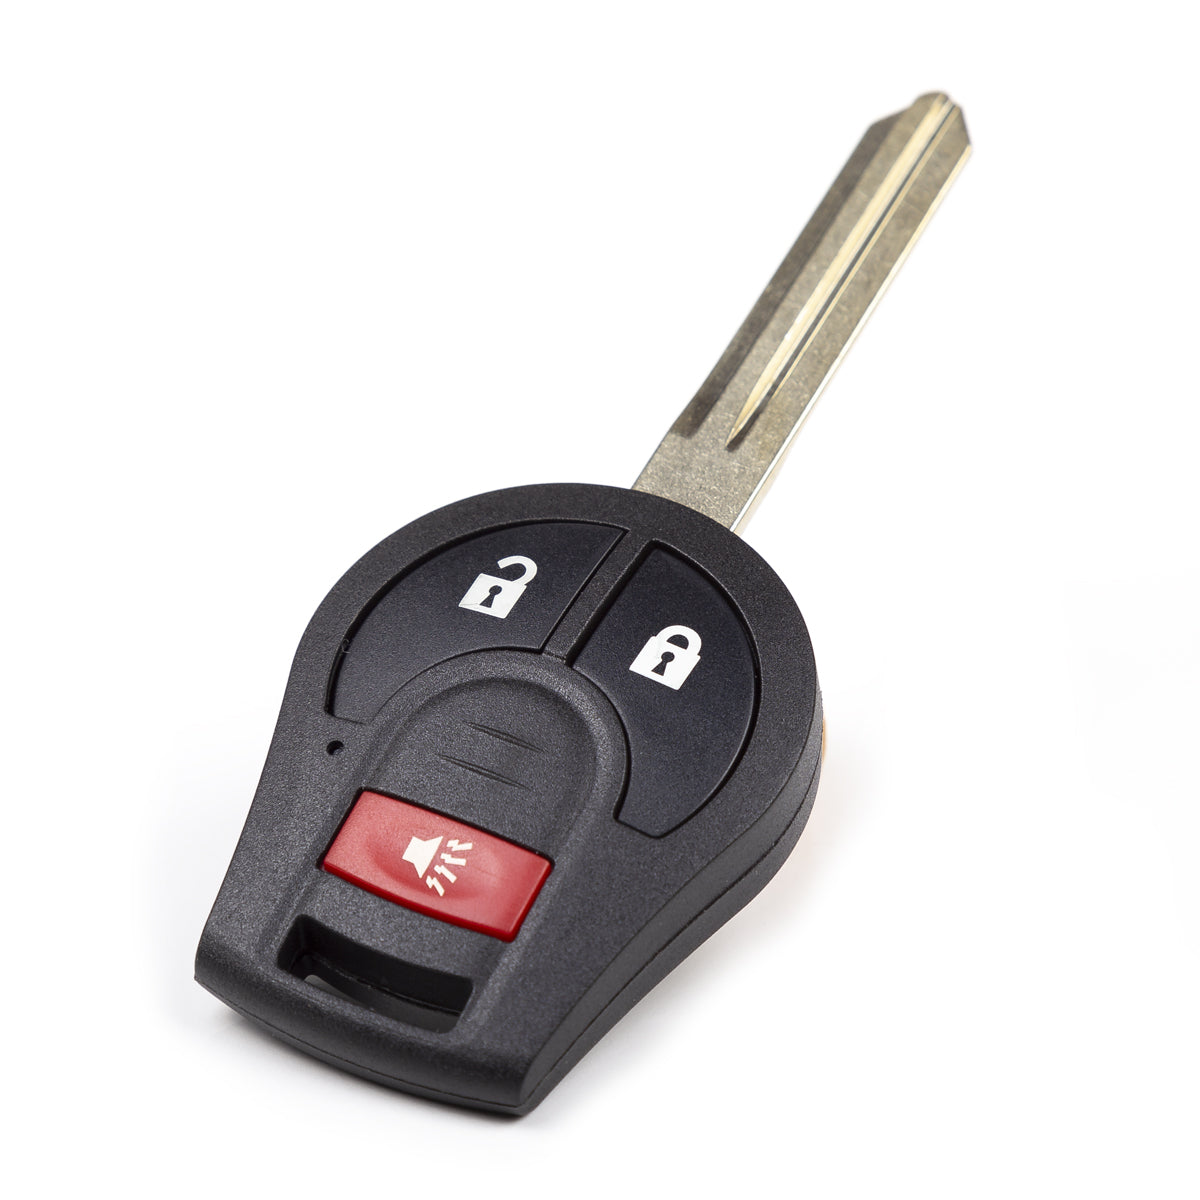 2006 Nissan Armada Key Fob Replacement - Aftermarket - 3 Buttons Fob FCC# CWTWB1U751